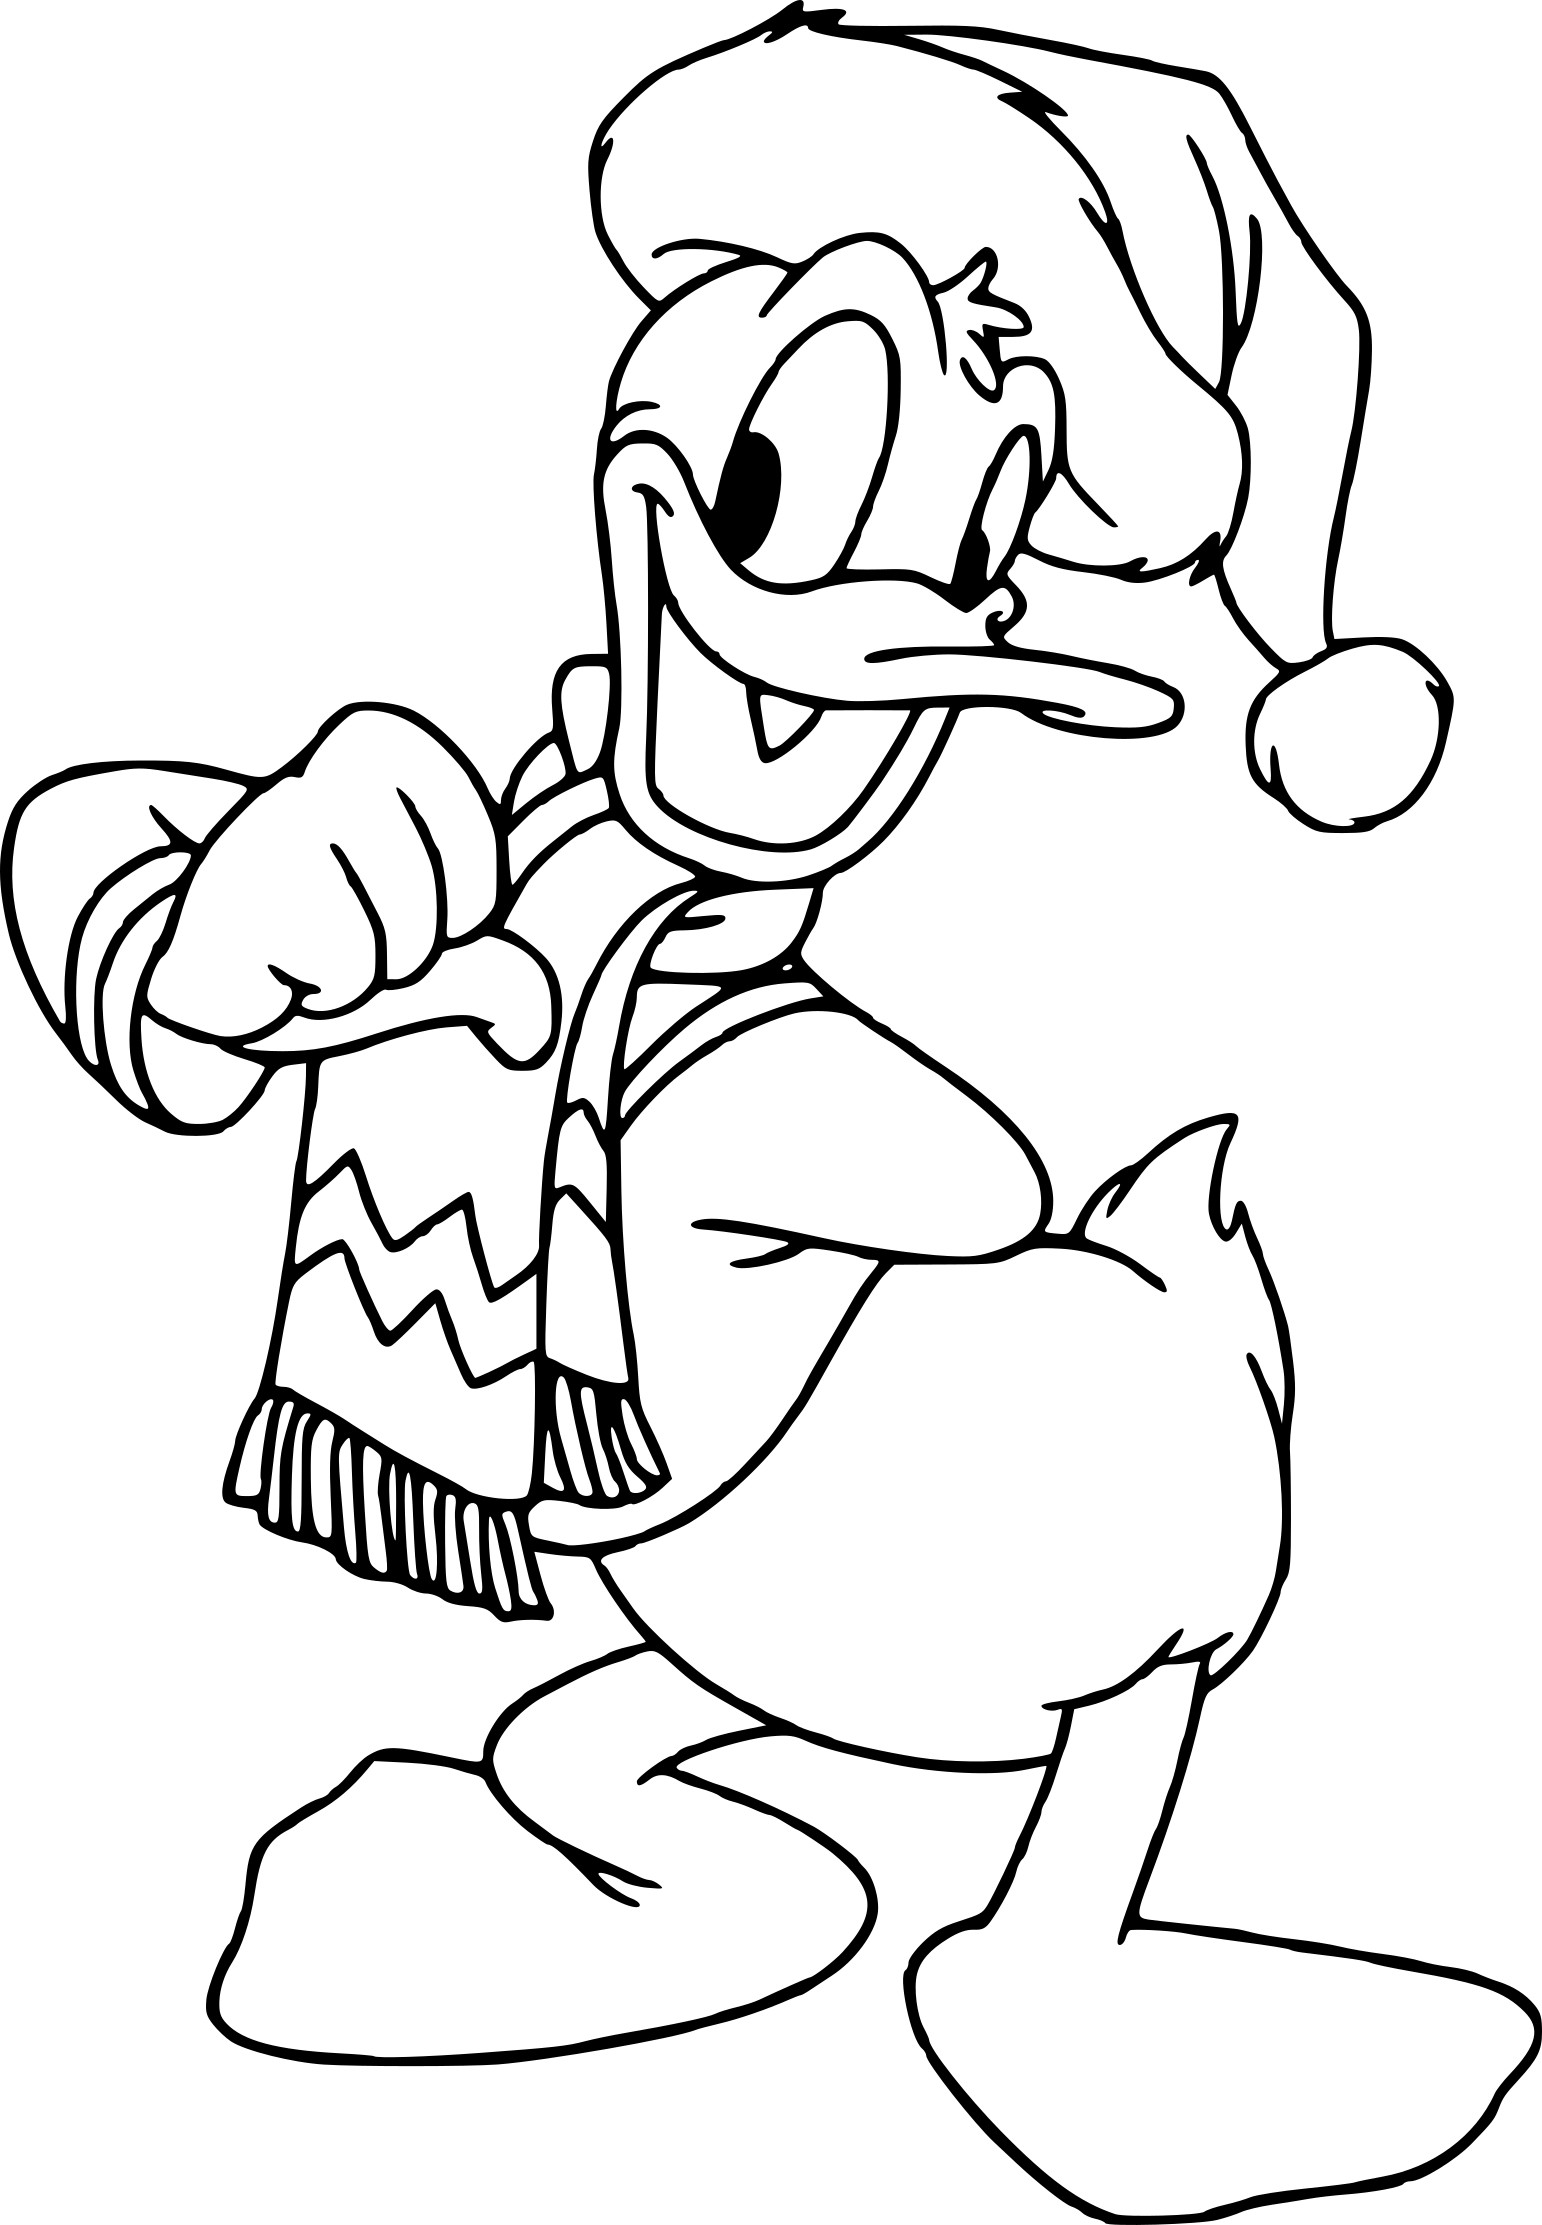 Donald At Christmas To Print coloring page